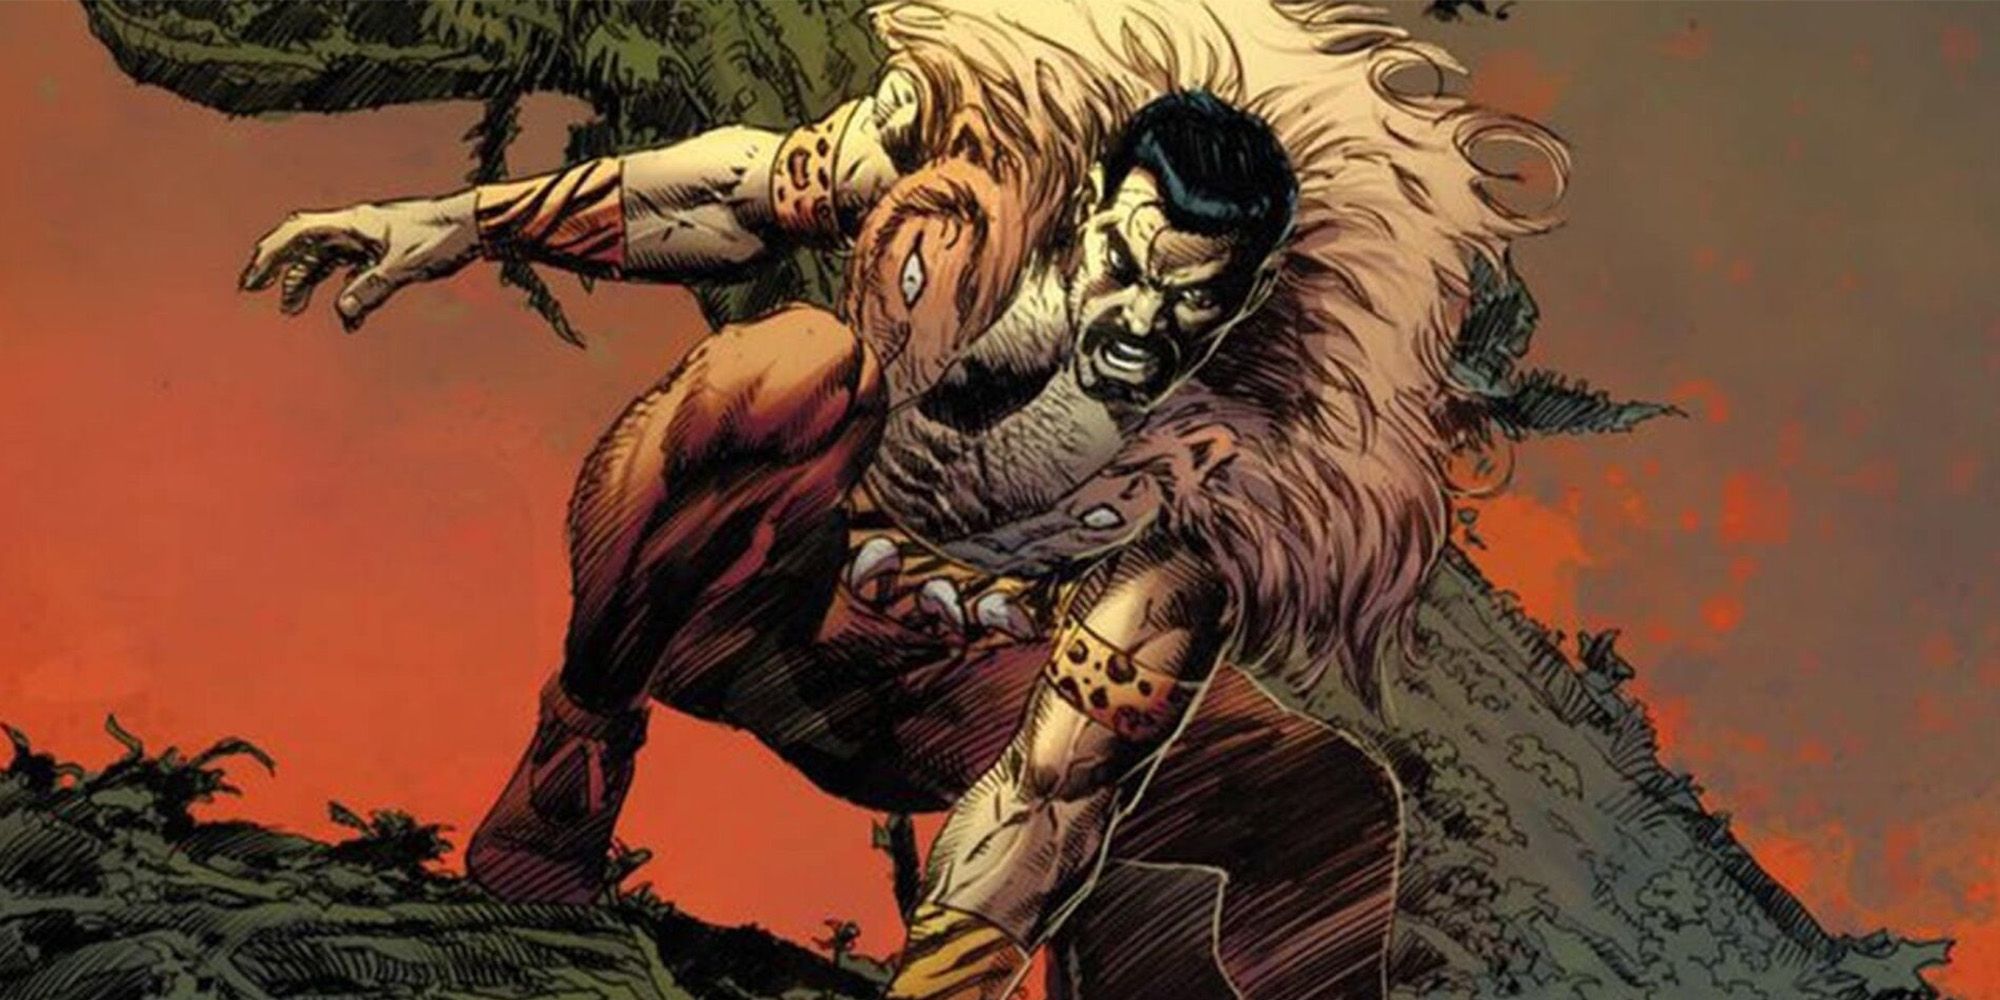 Kraven the Hunter superhero landing while wearing lion pelt.